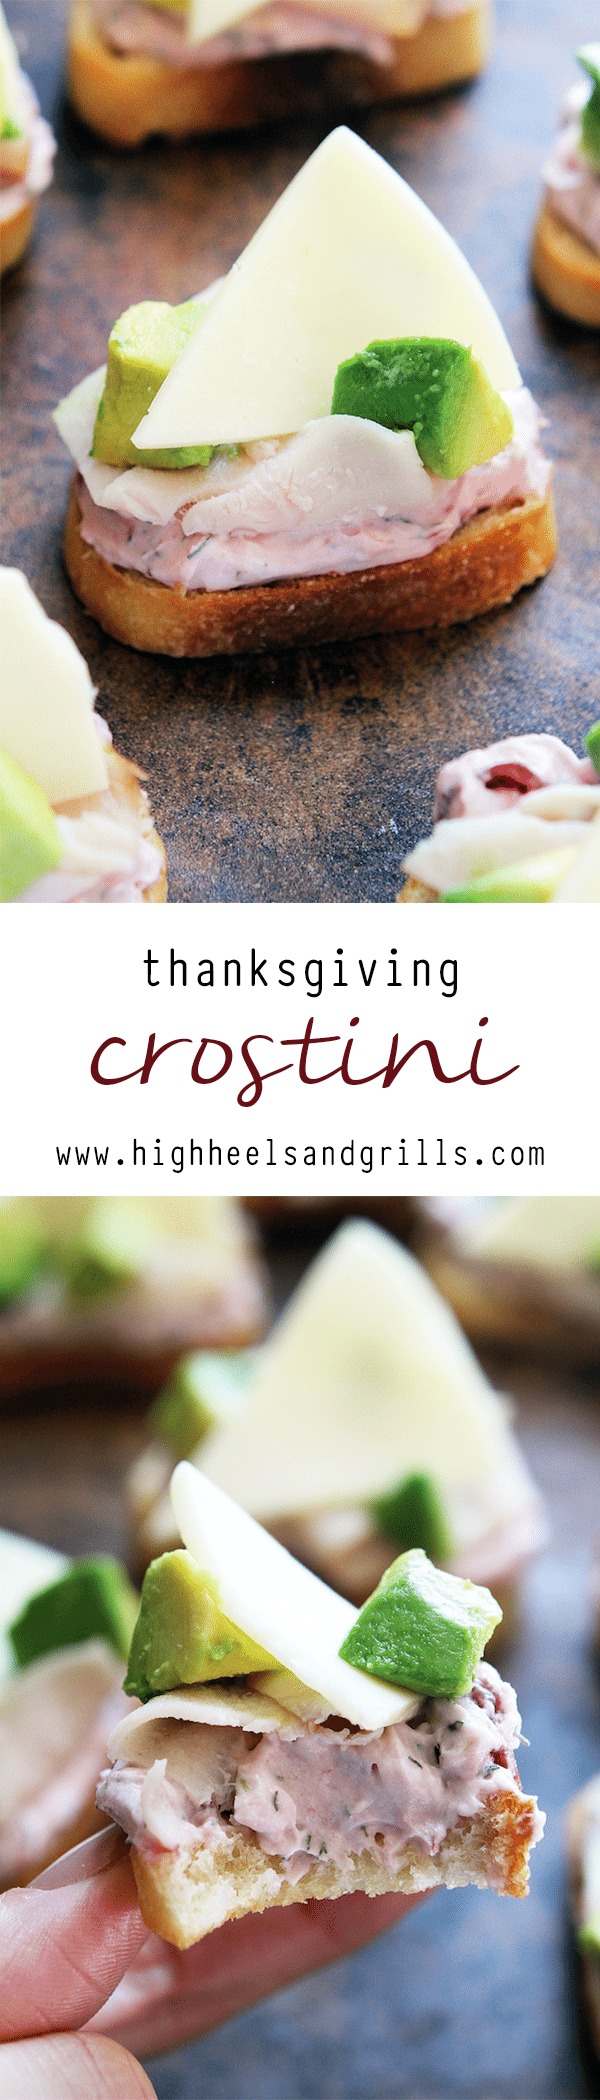 Thanksgiving Crostini Collage